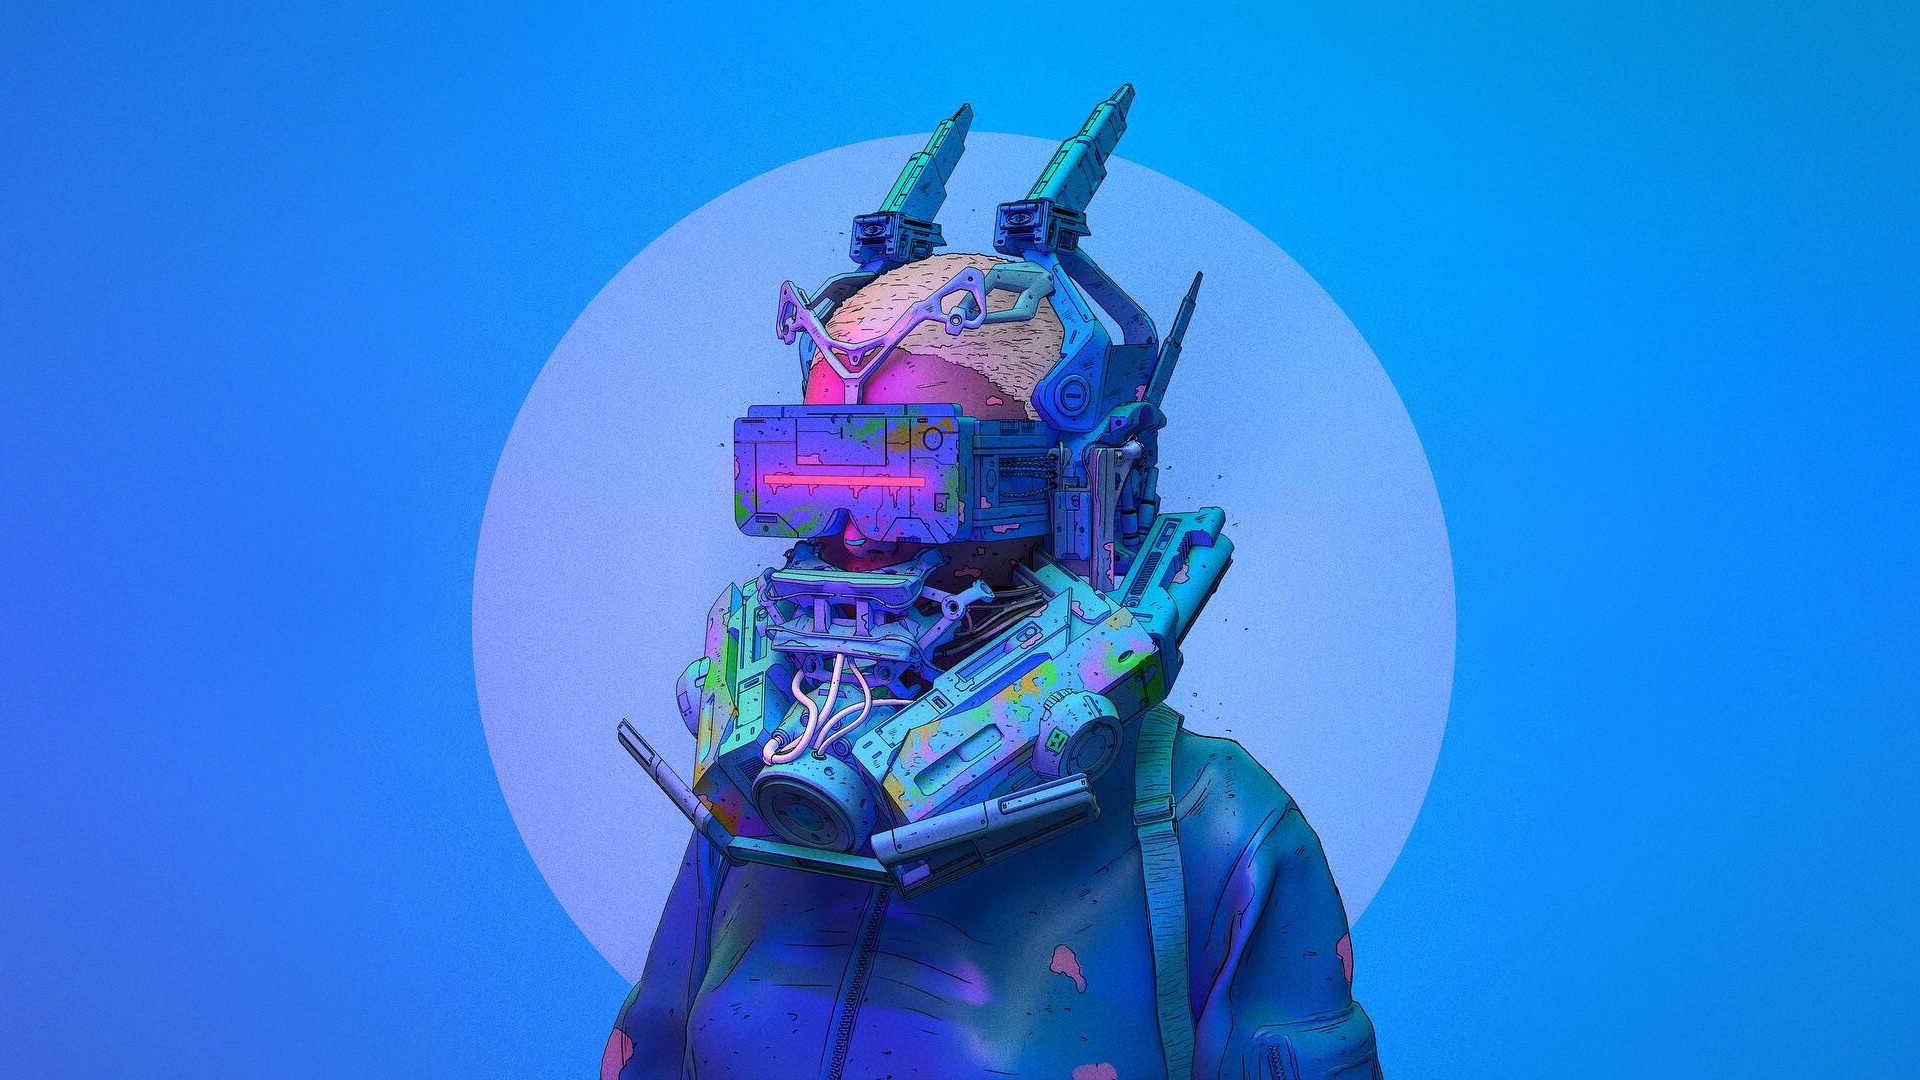 General 1920x1080 futuristic blue background artwork cyborg cyberpunk science fiction